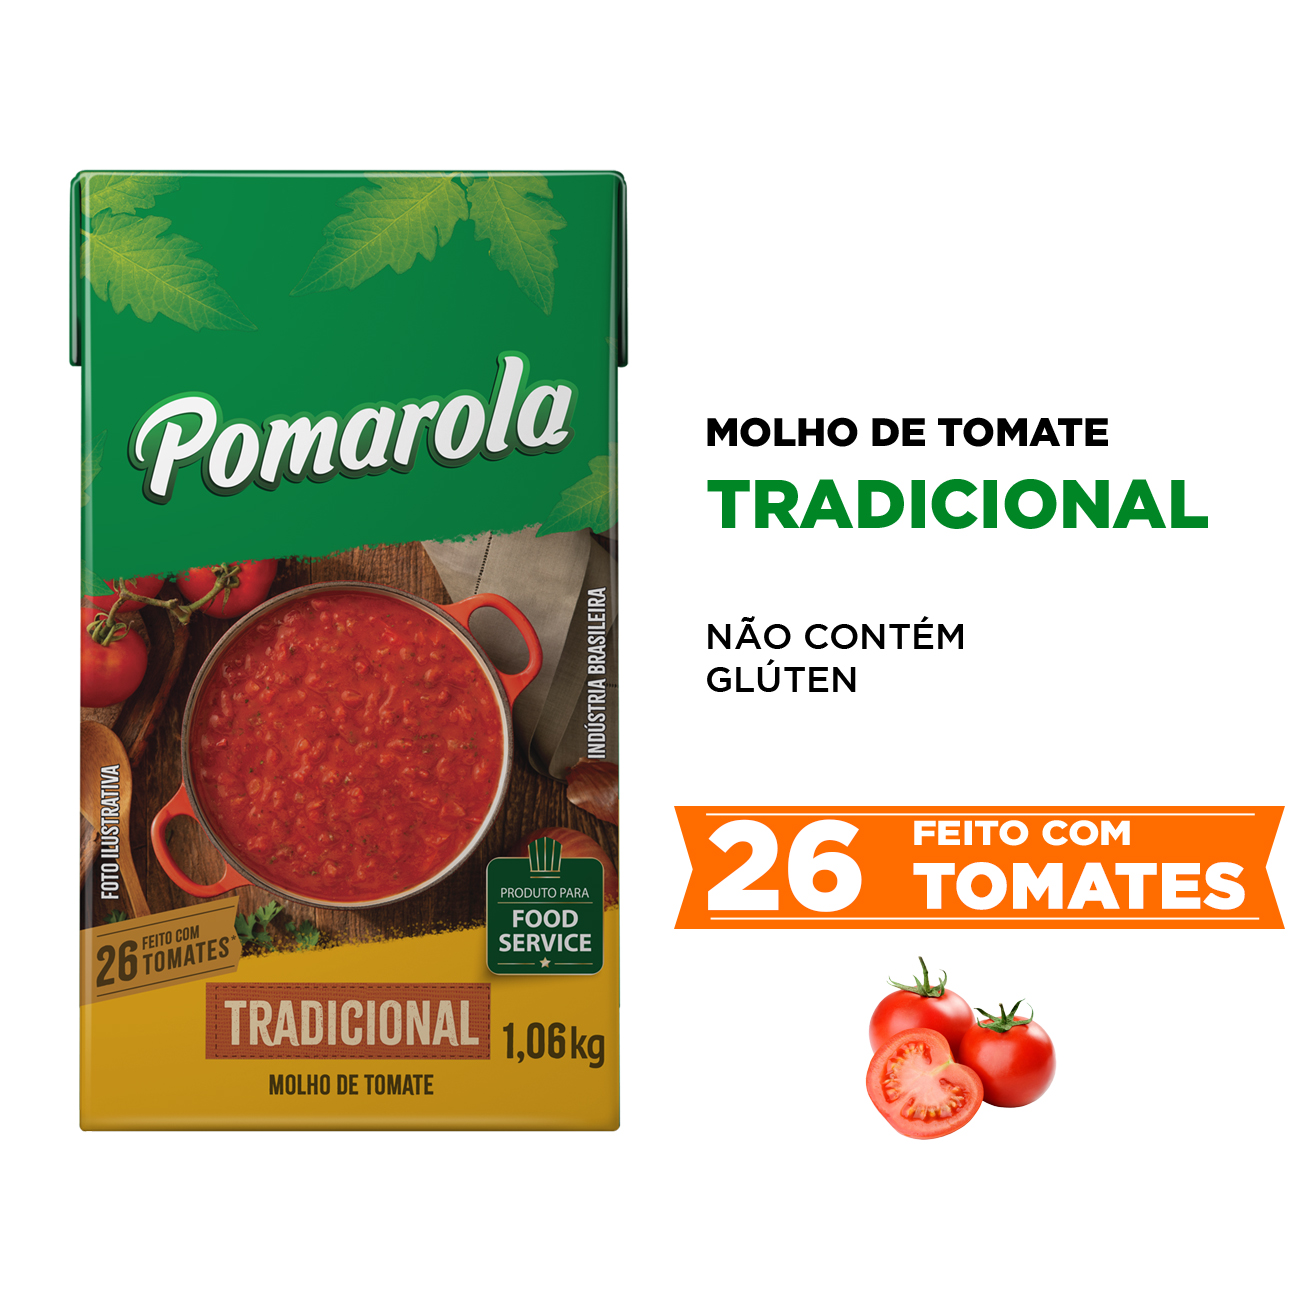 Molho de Tomate Pomarola Tradicional Tetra Pak 1,06kg